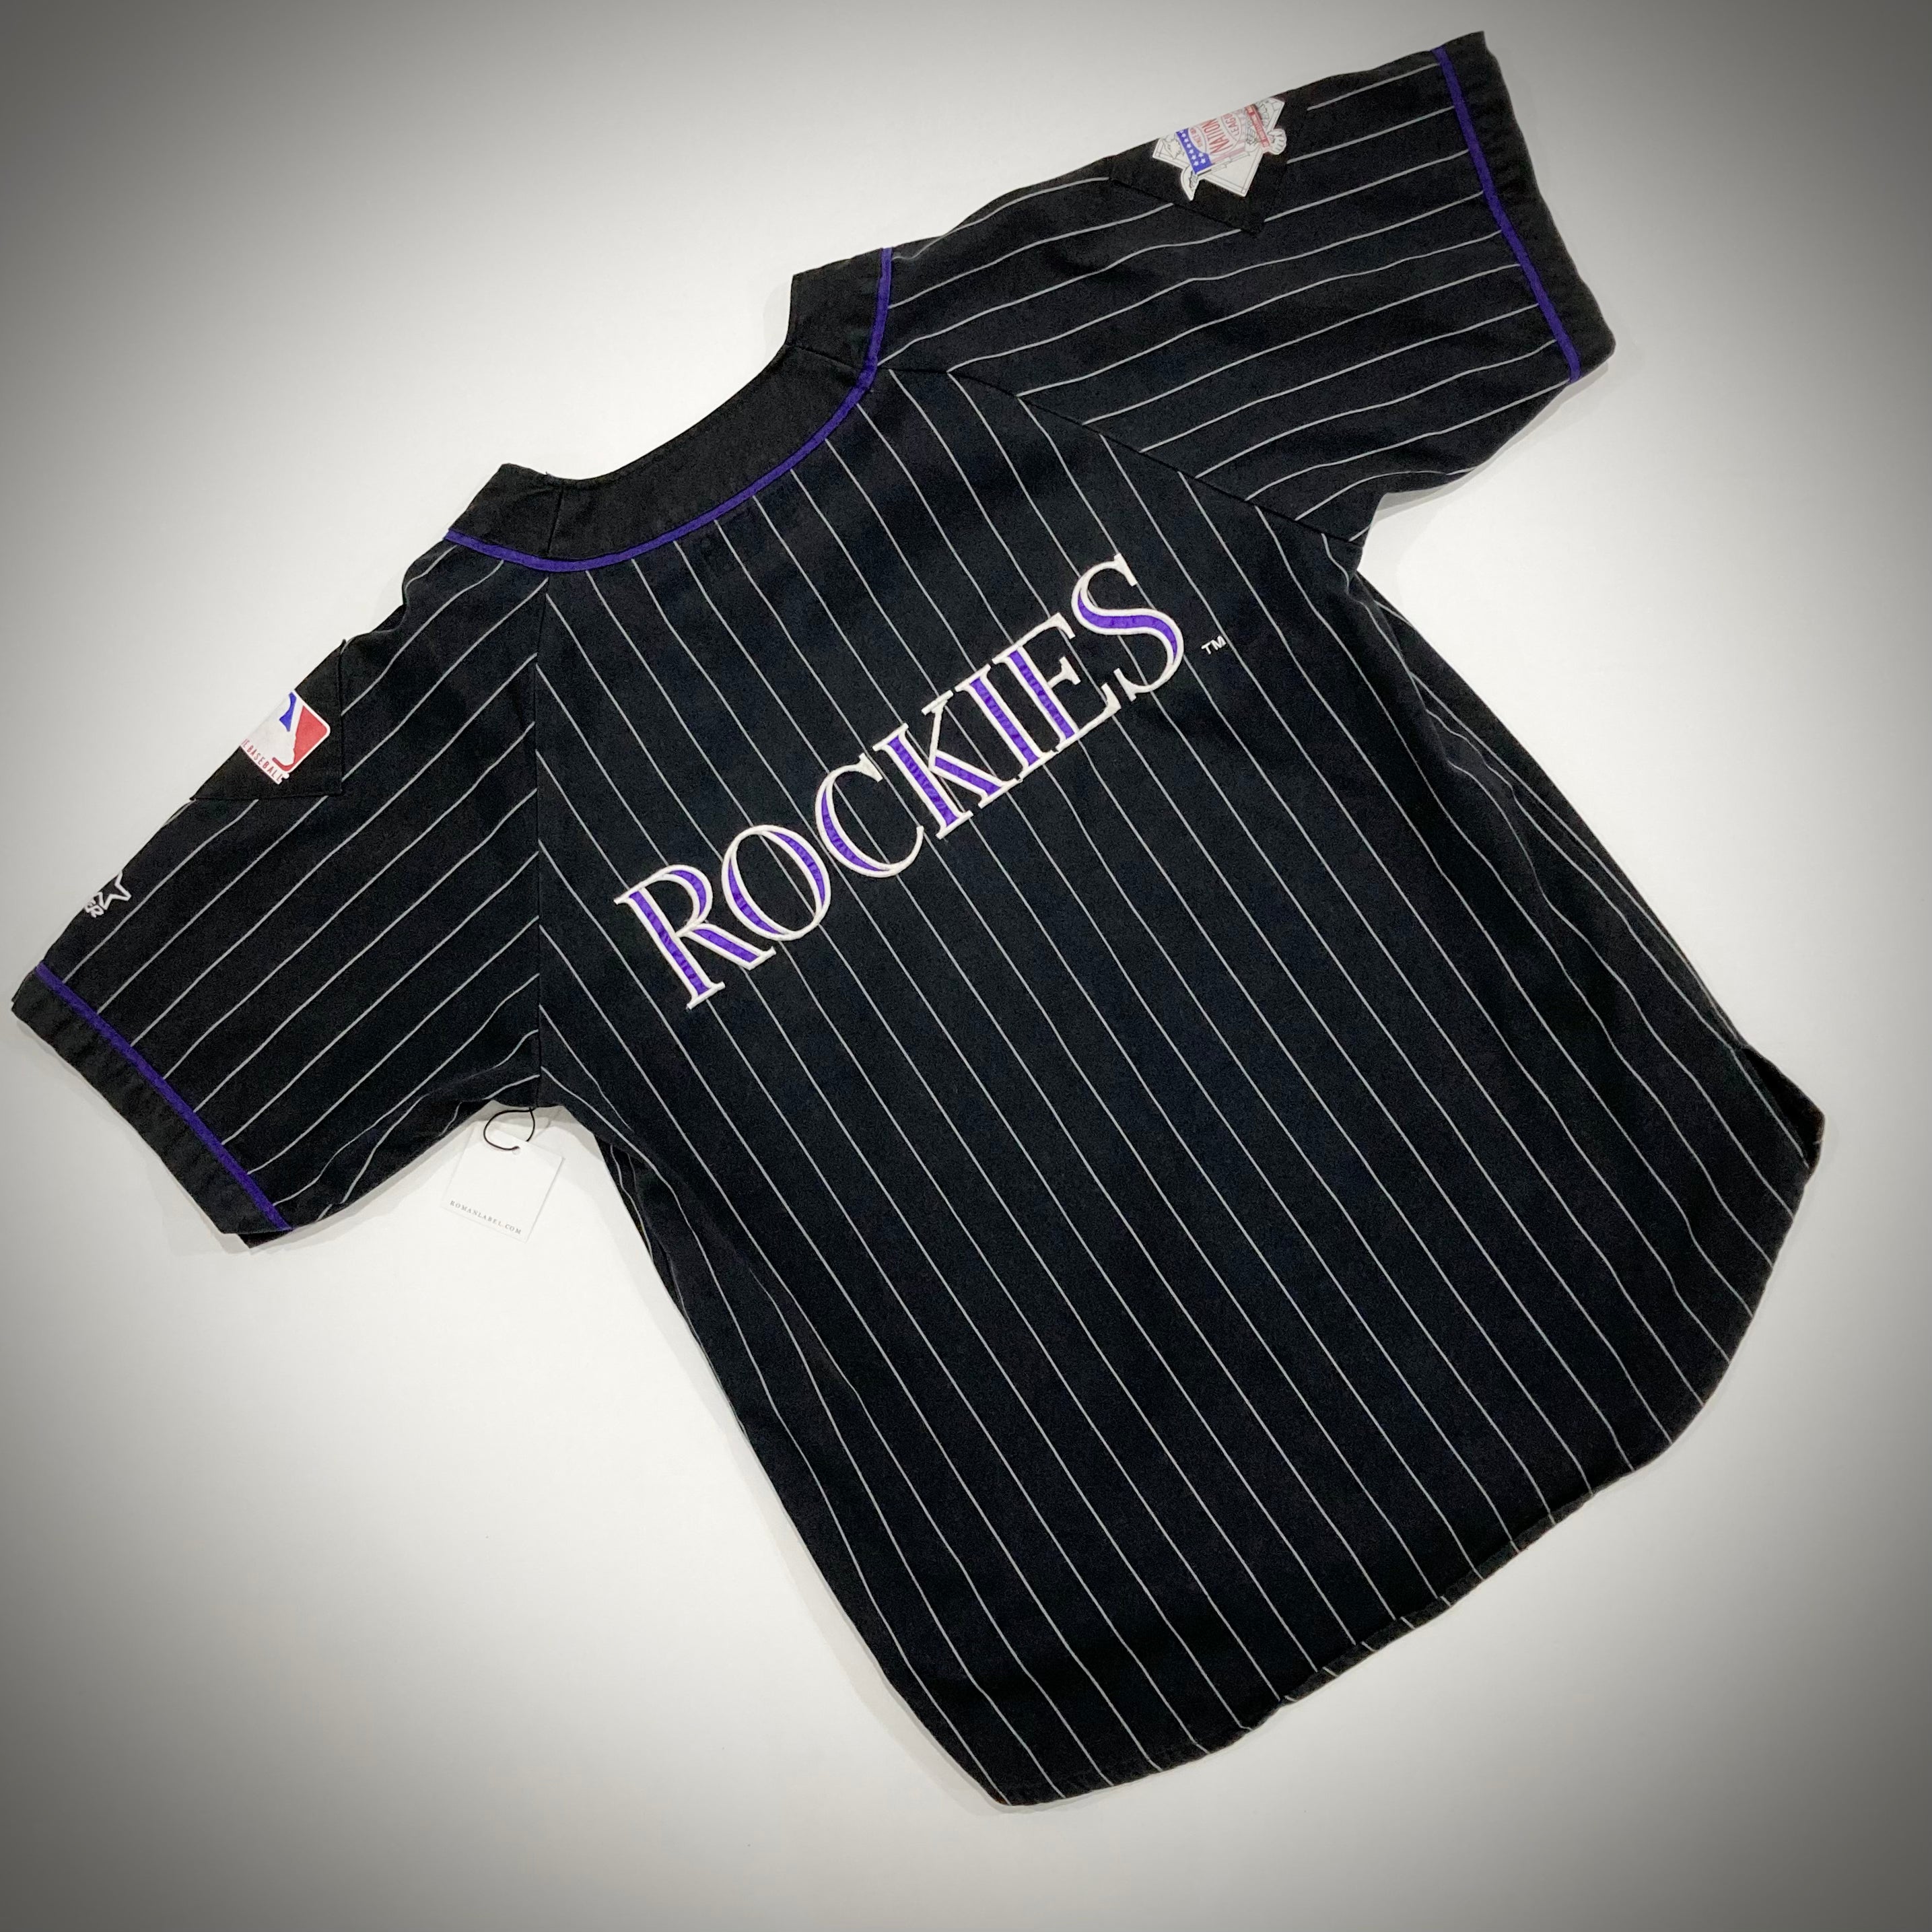 Vintage 90s Colorado Rockies Baseball Jersey Authentic Sewn Pro Cut